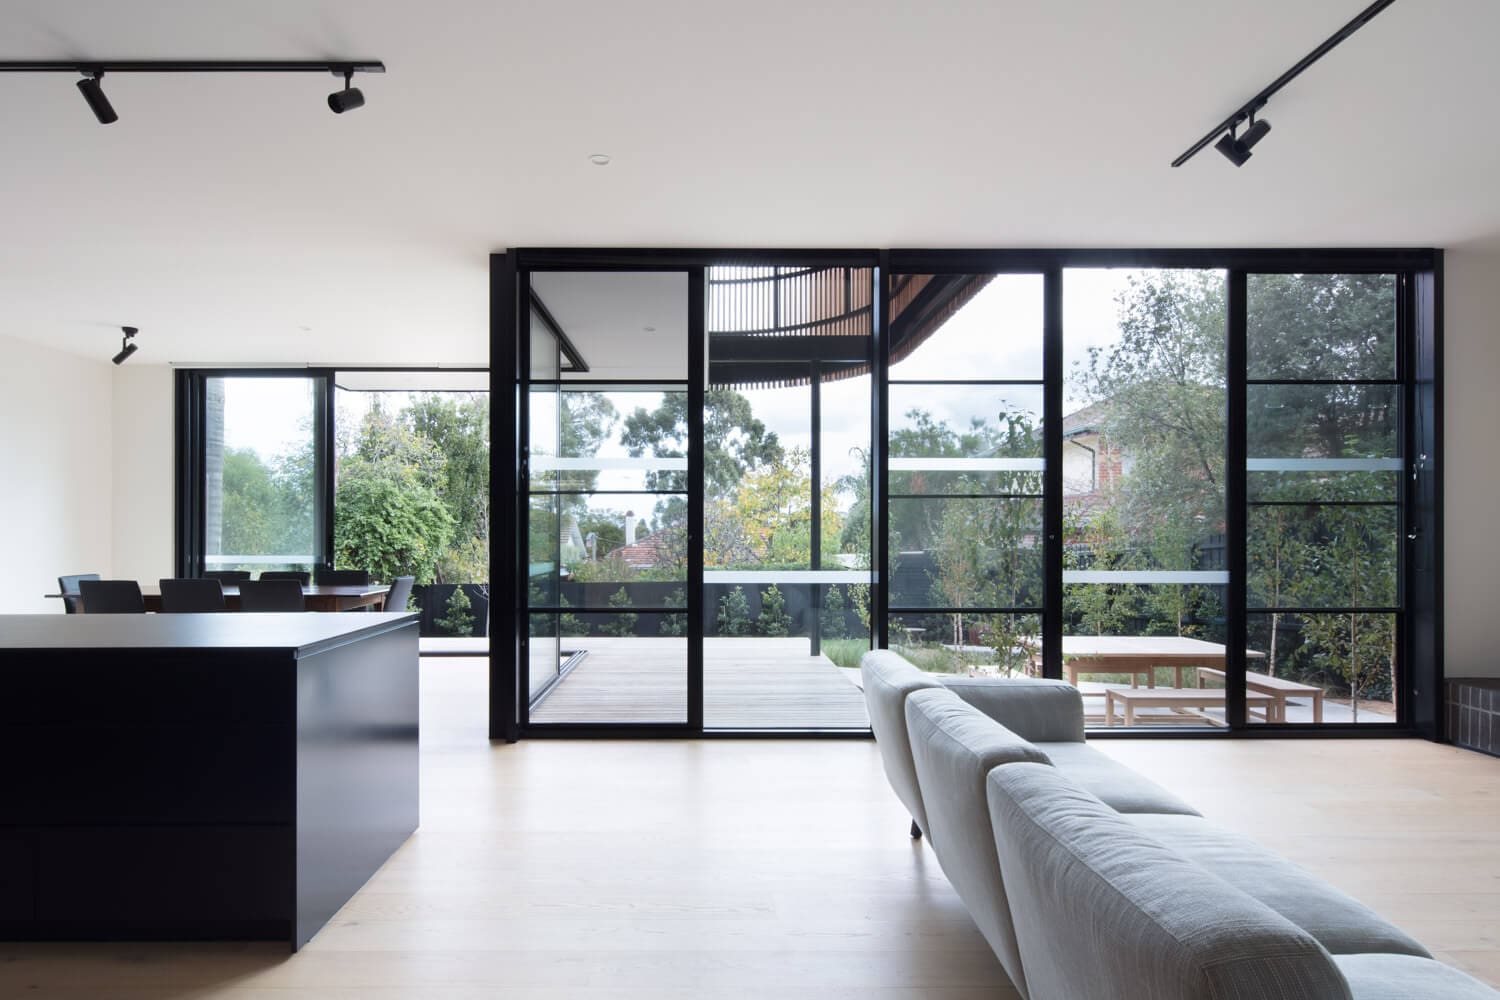 Black and white interior of modular home